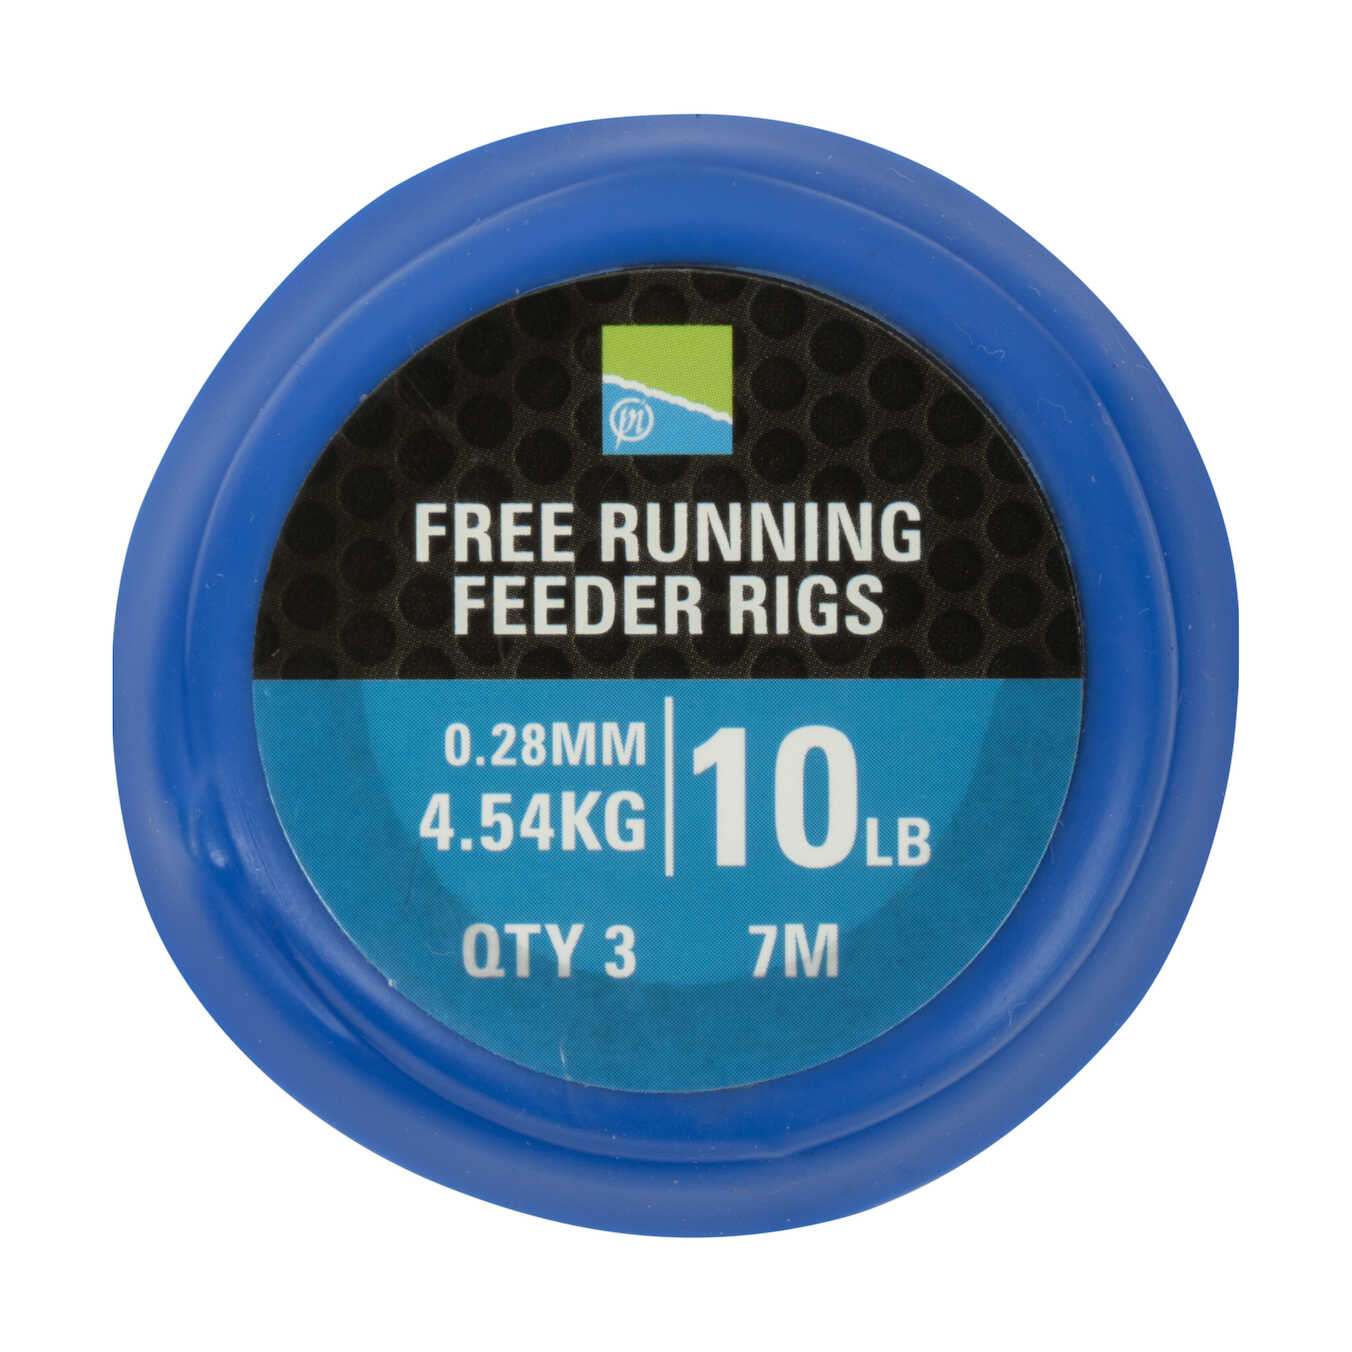 preston free running feeder rigs-1